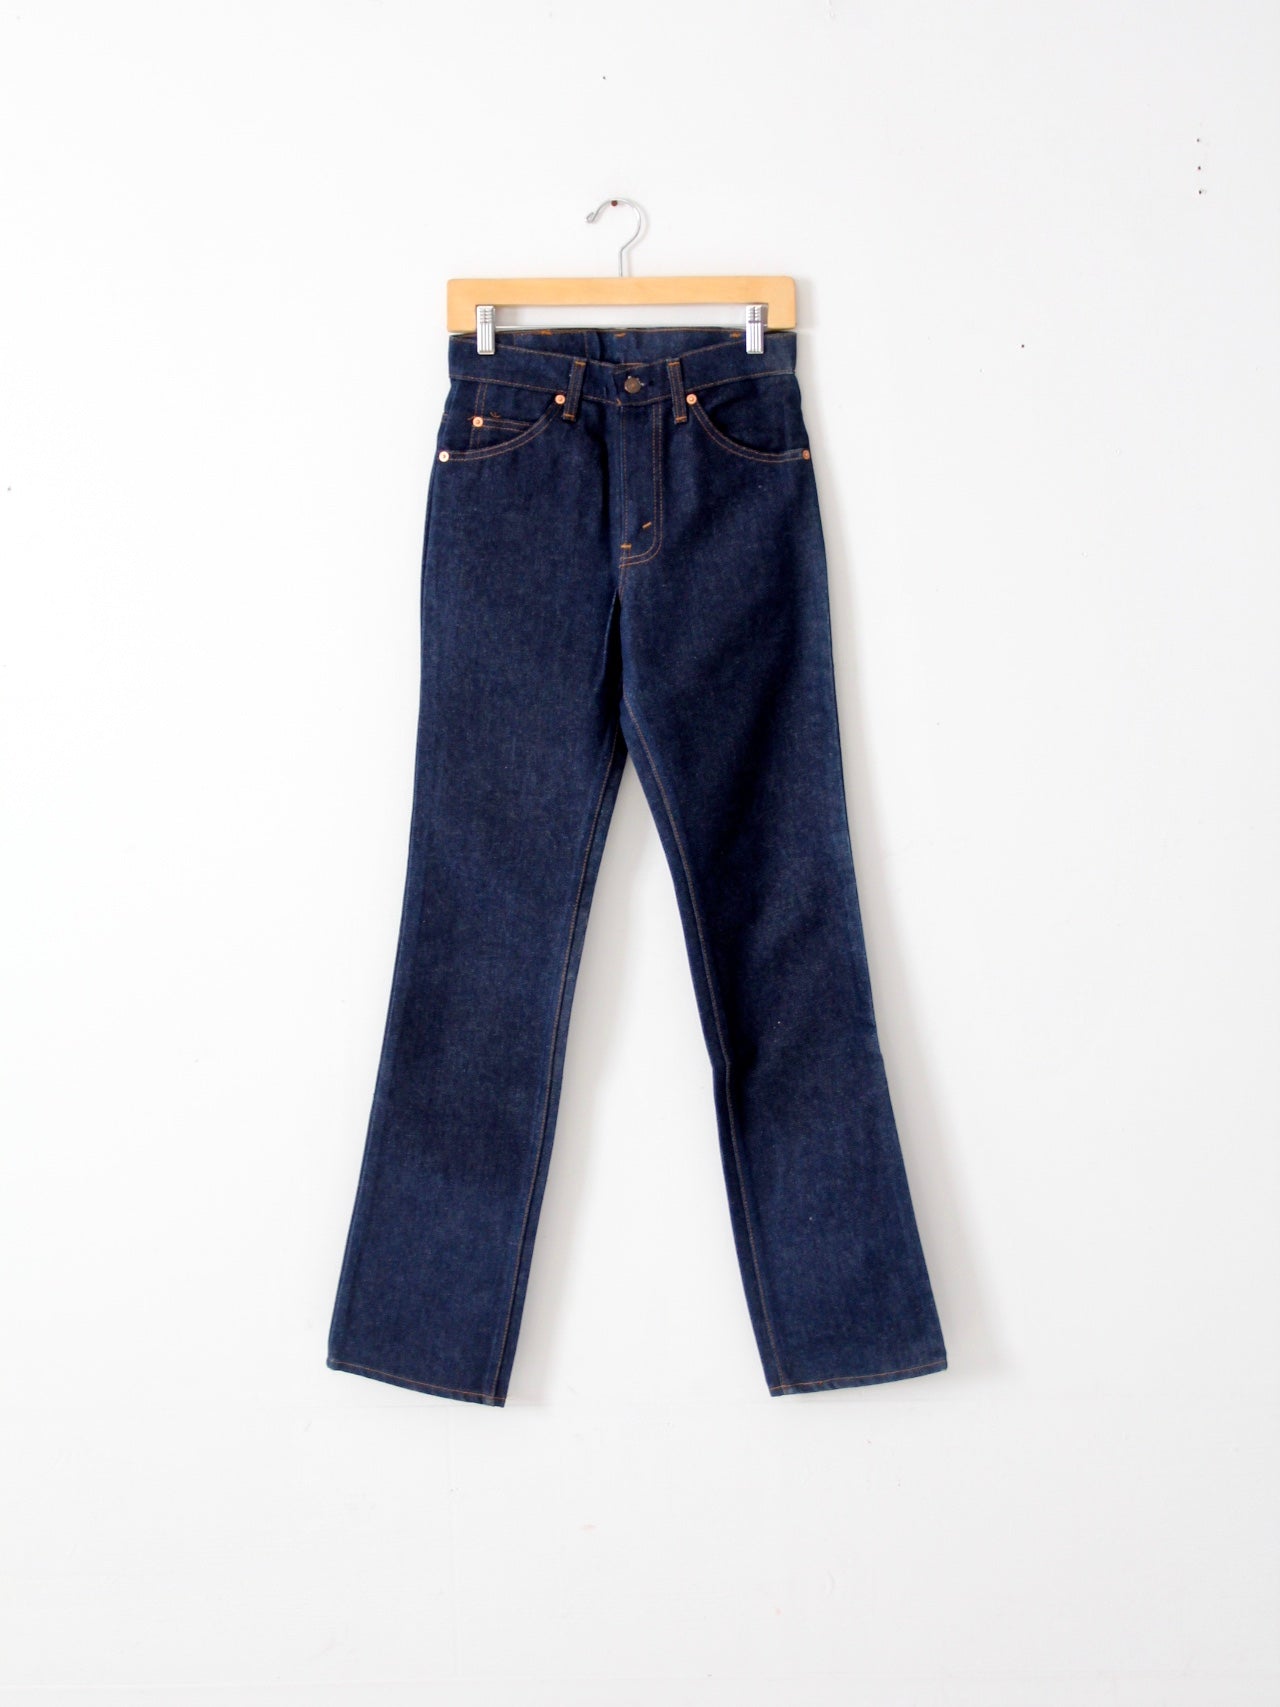 vintage 70s Levis dark wash 509 jeans, 28 x 33 – 86 Vintage